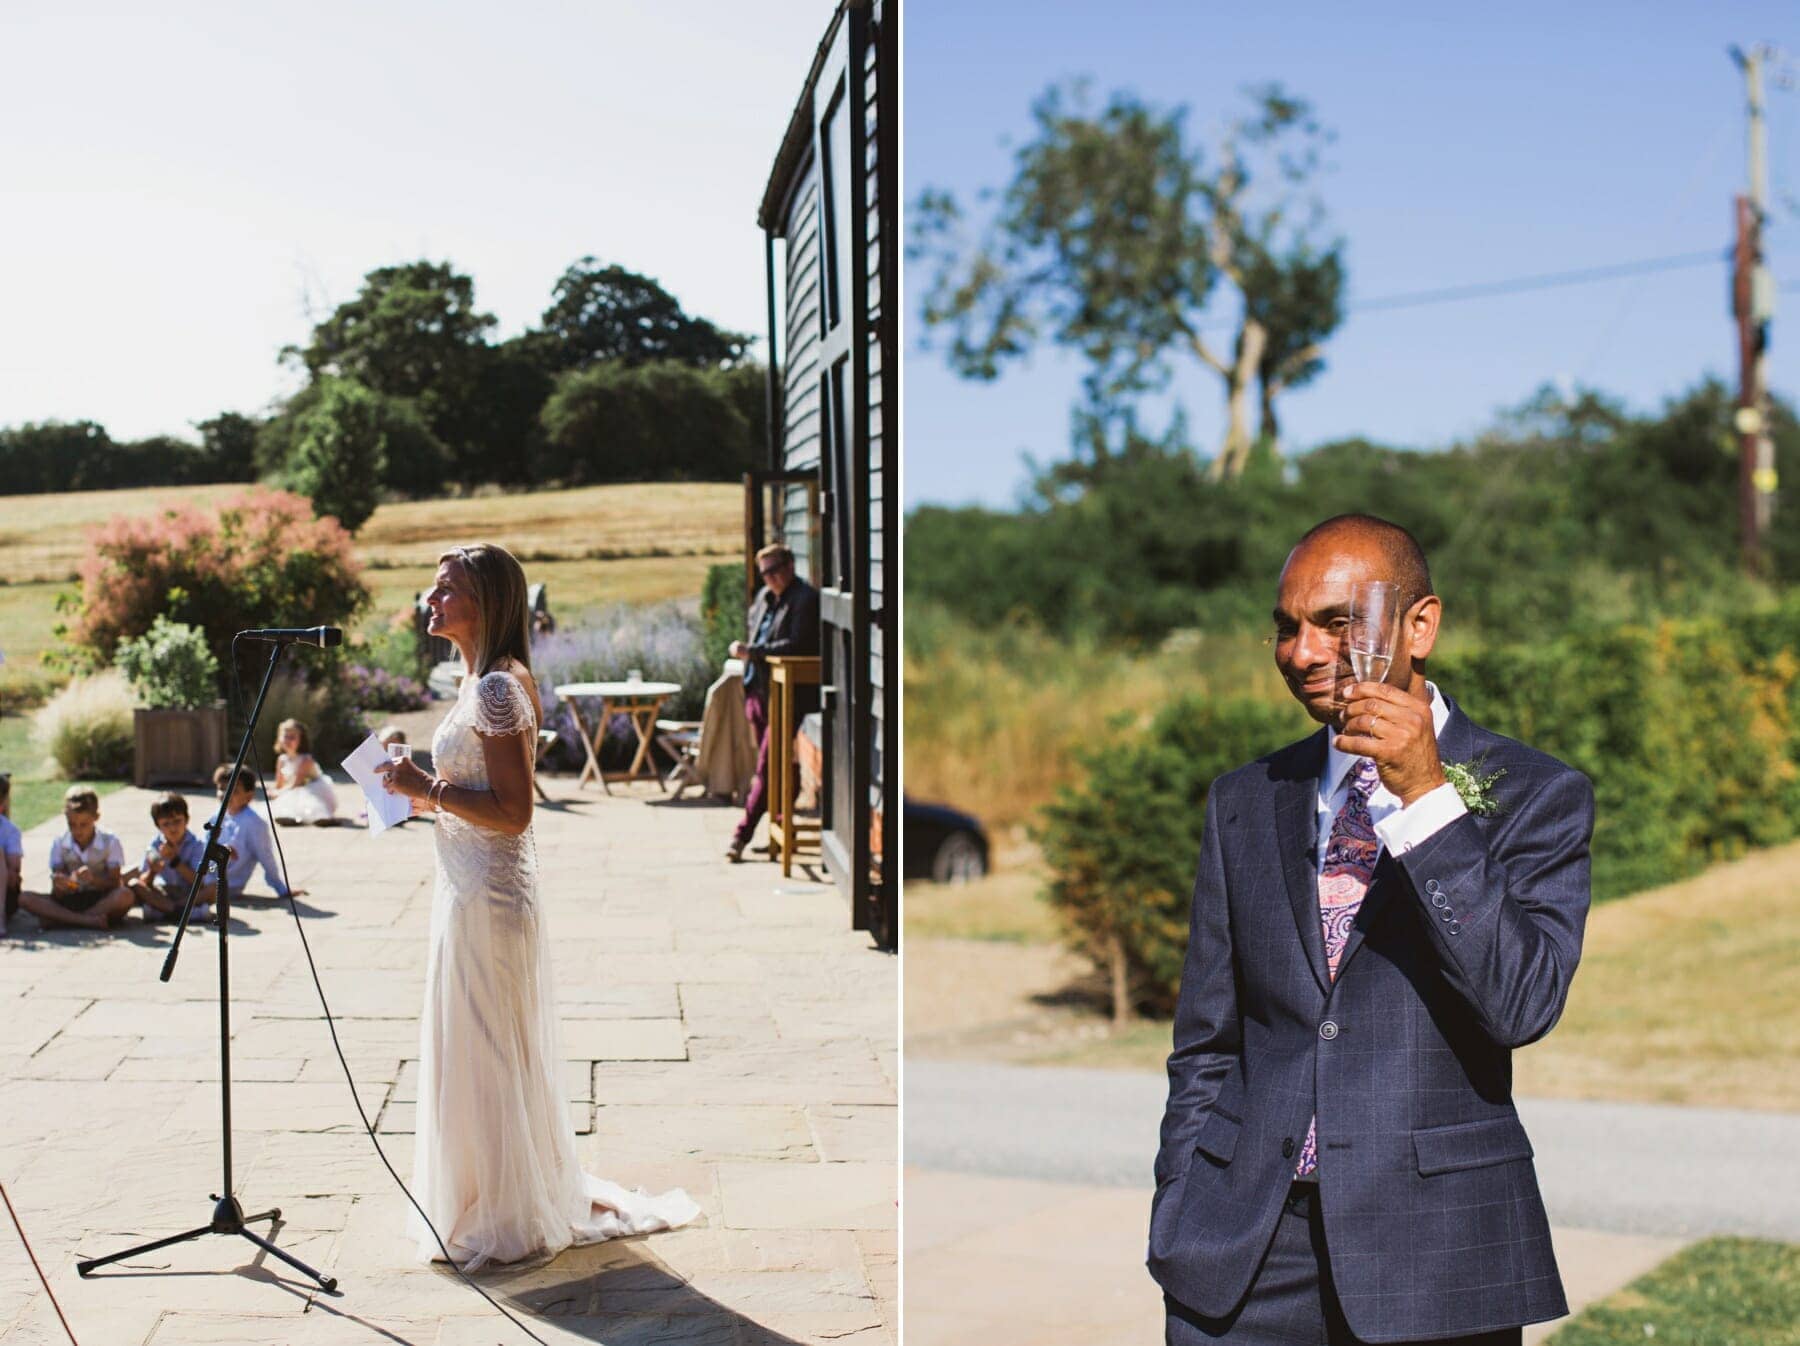 Bruisyard Hall and Barn wedding photography speeches